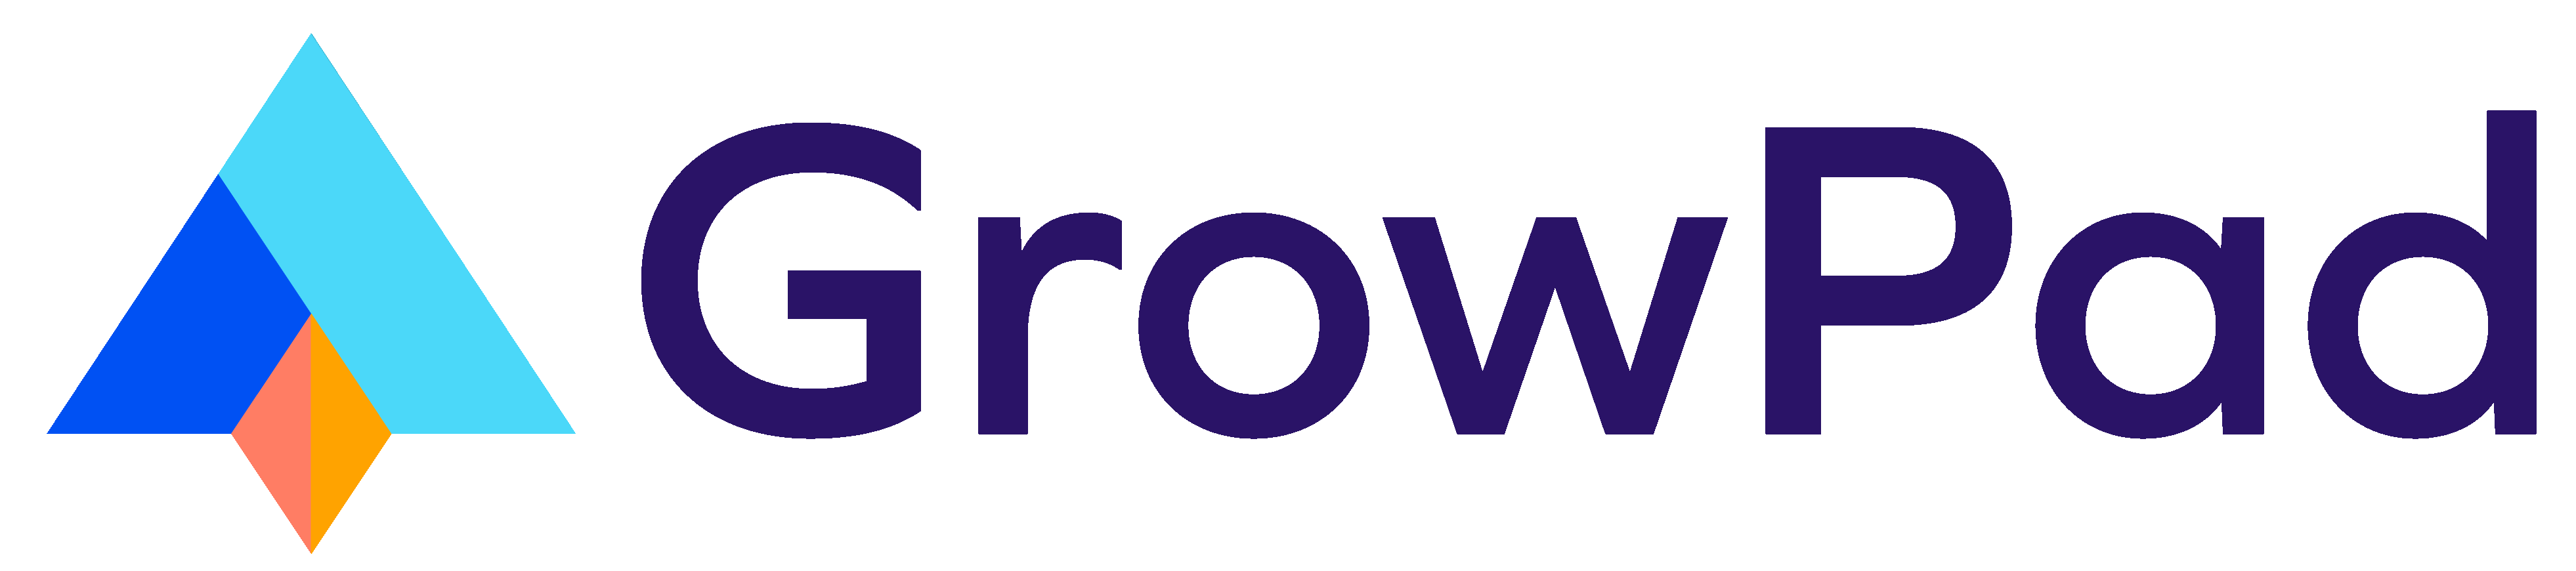 GrowPad logo